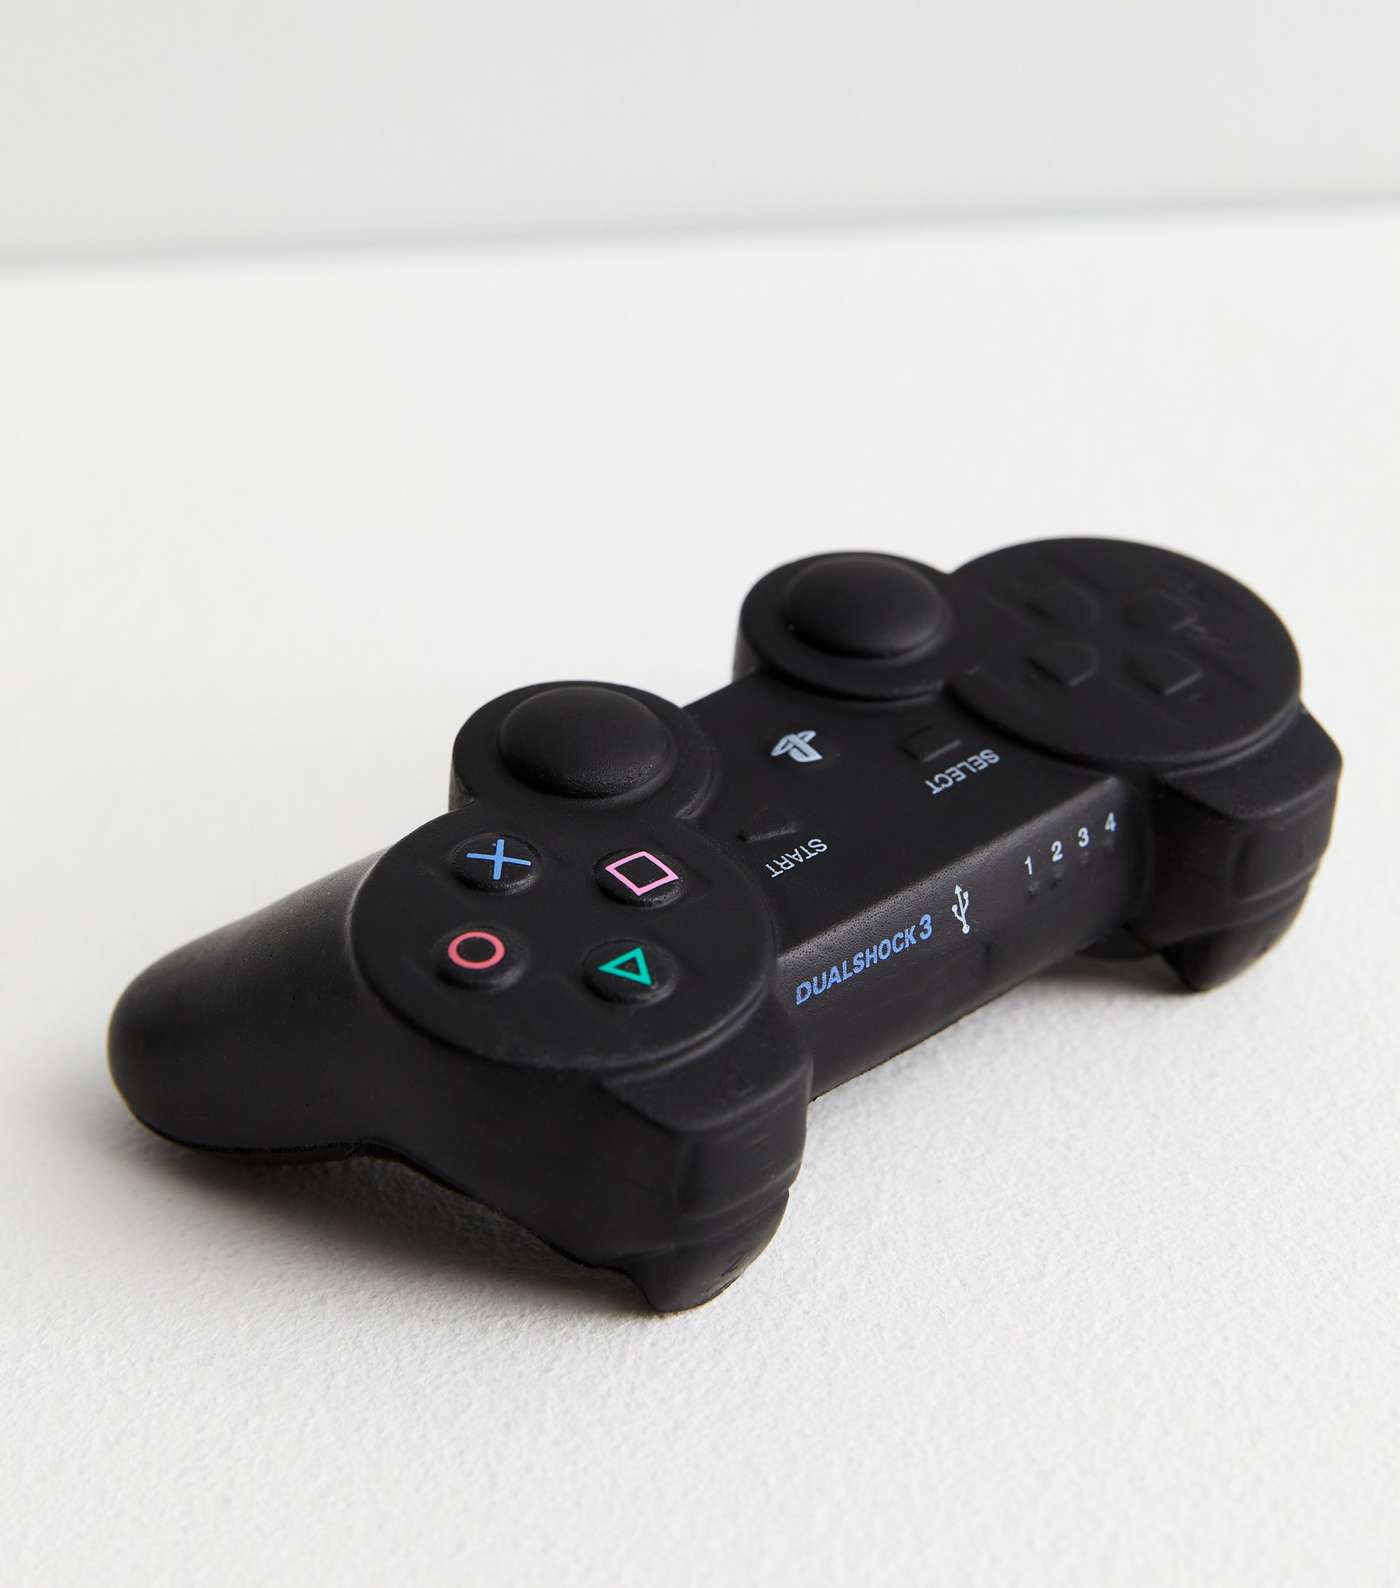 Black PlayStation Stress Controller Image 2